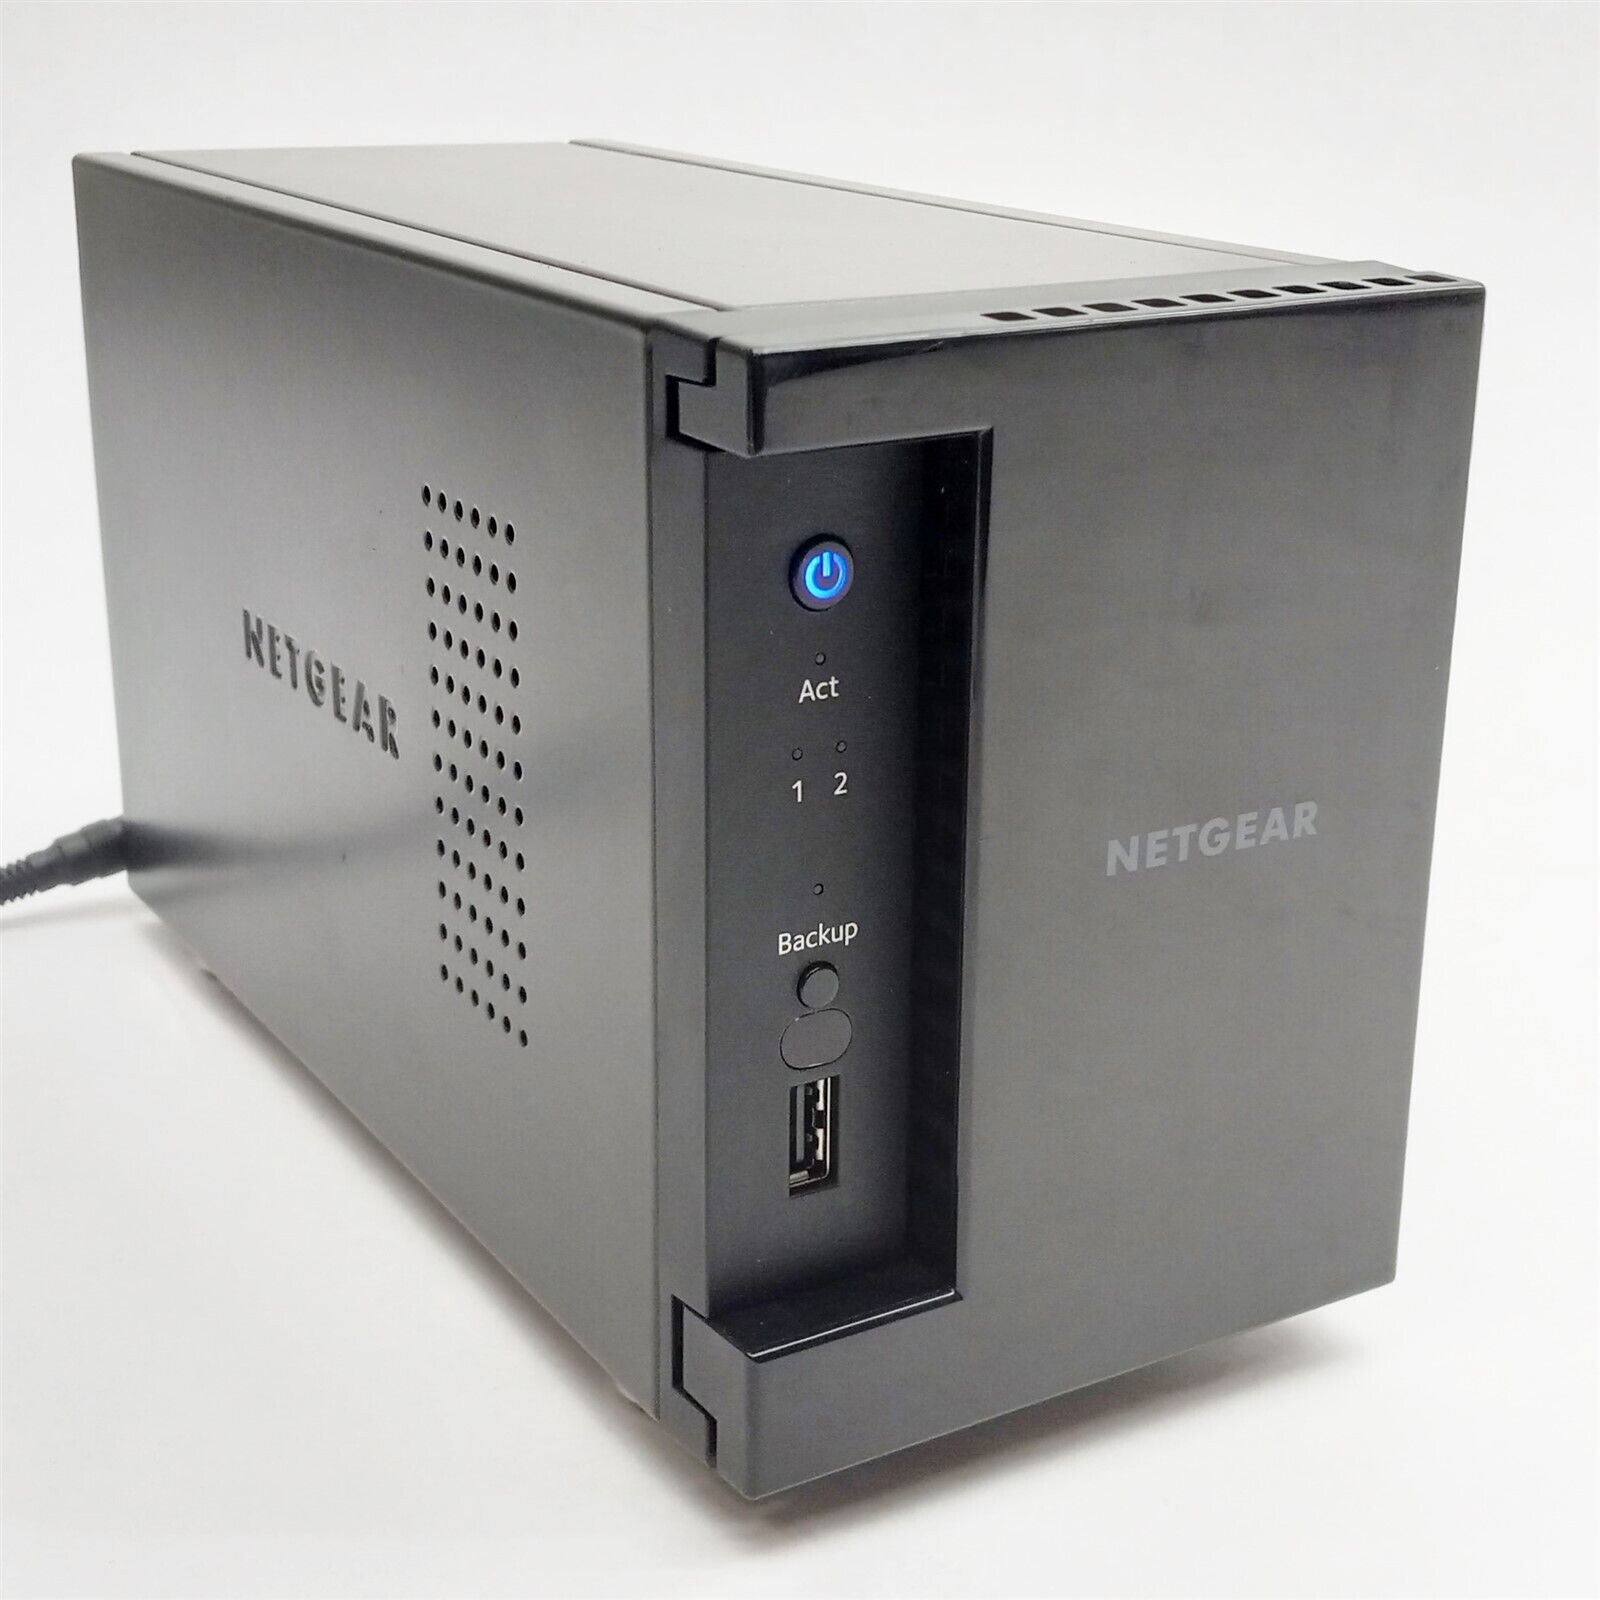 Netgear RN31200 ReadyNAS 312 2-Bay NAS Desktop Network Storage NO HDD/Caddies